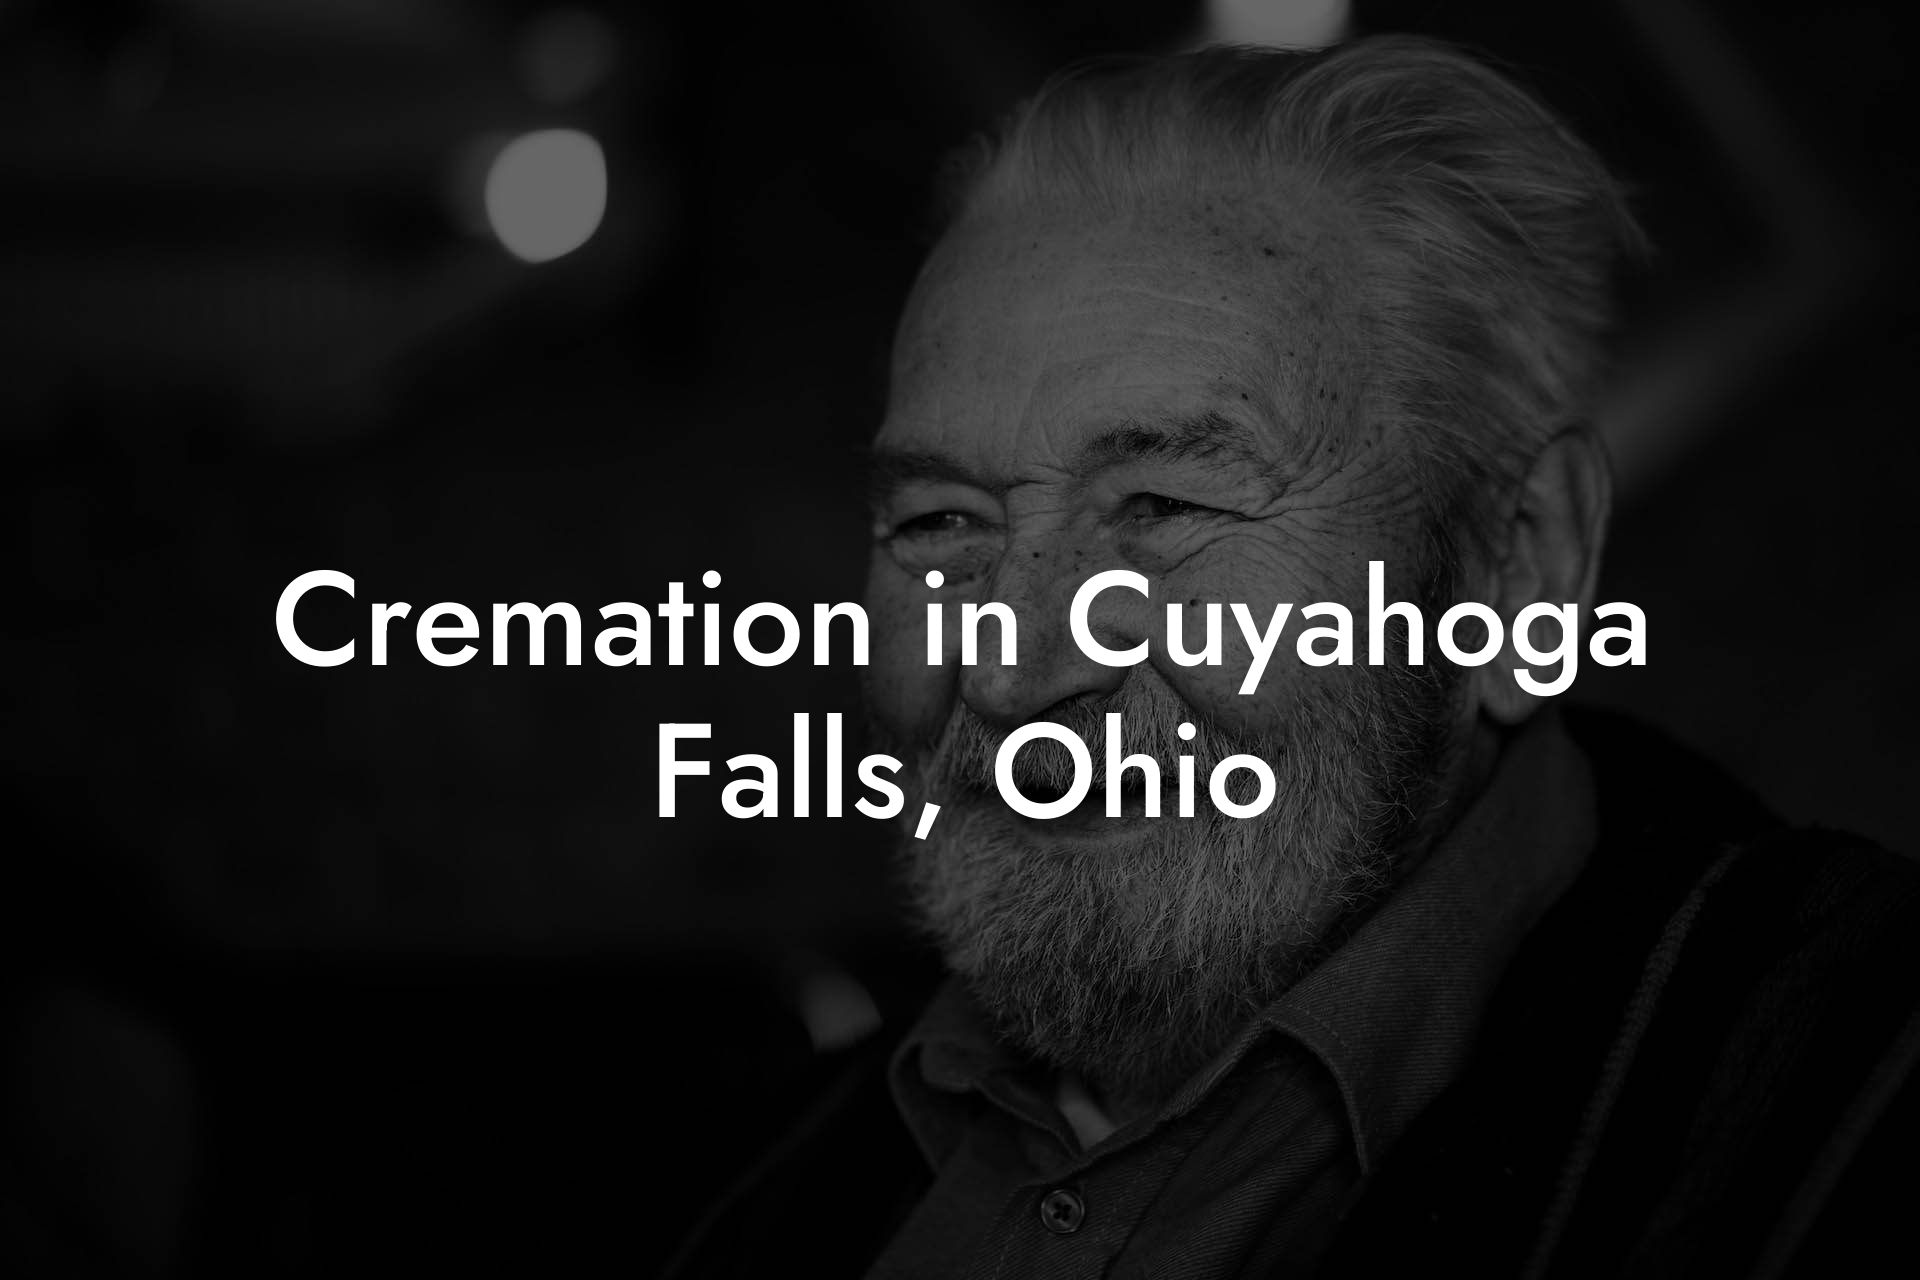 Cremation in Cuyahoga Falls, Ohio